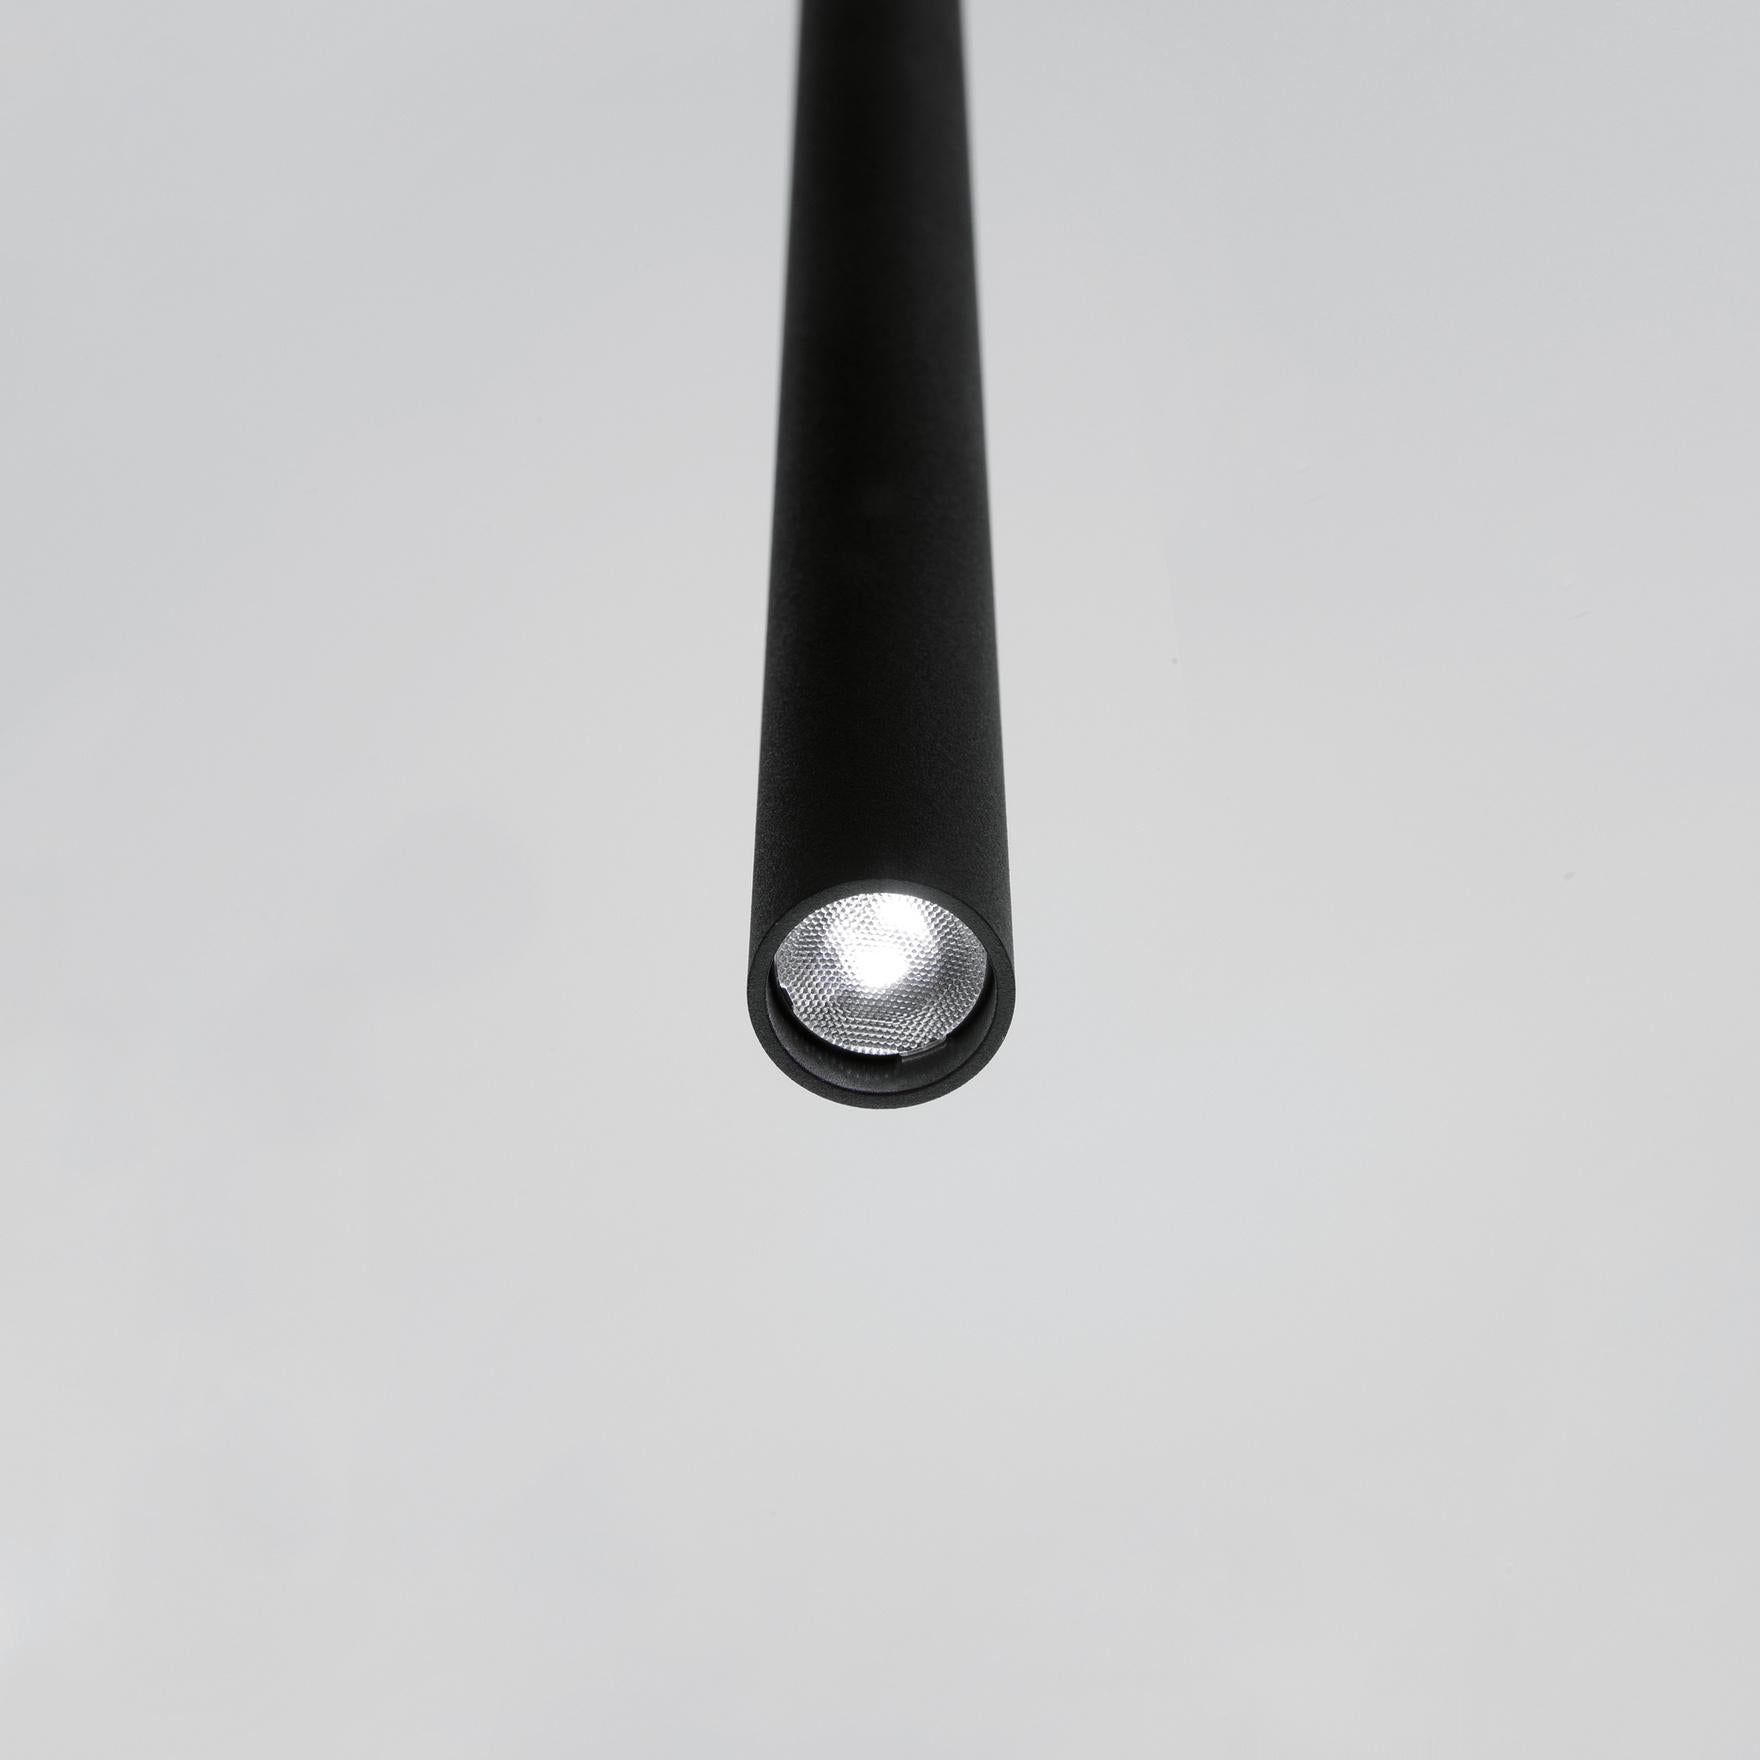 Davide Groppi MISS pendant lamp ON/OFF in total black by Omar Carraglia  For Sale 5